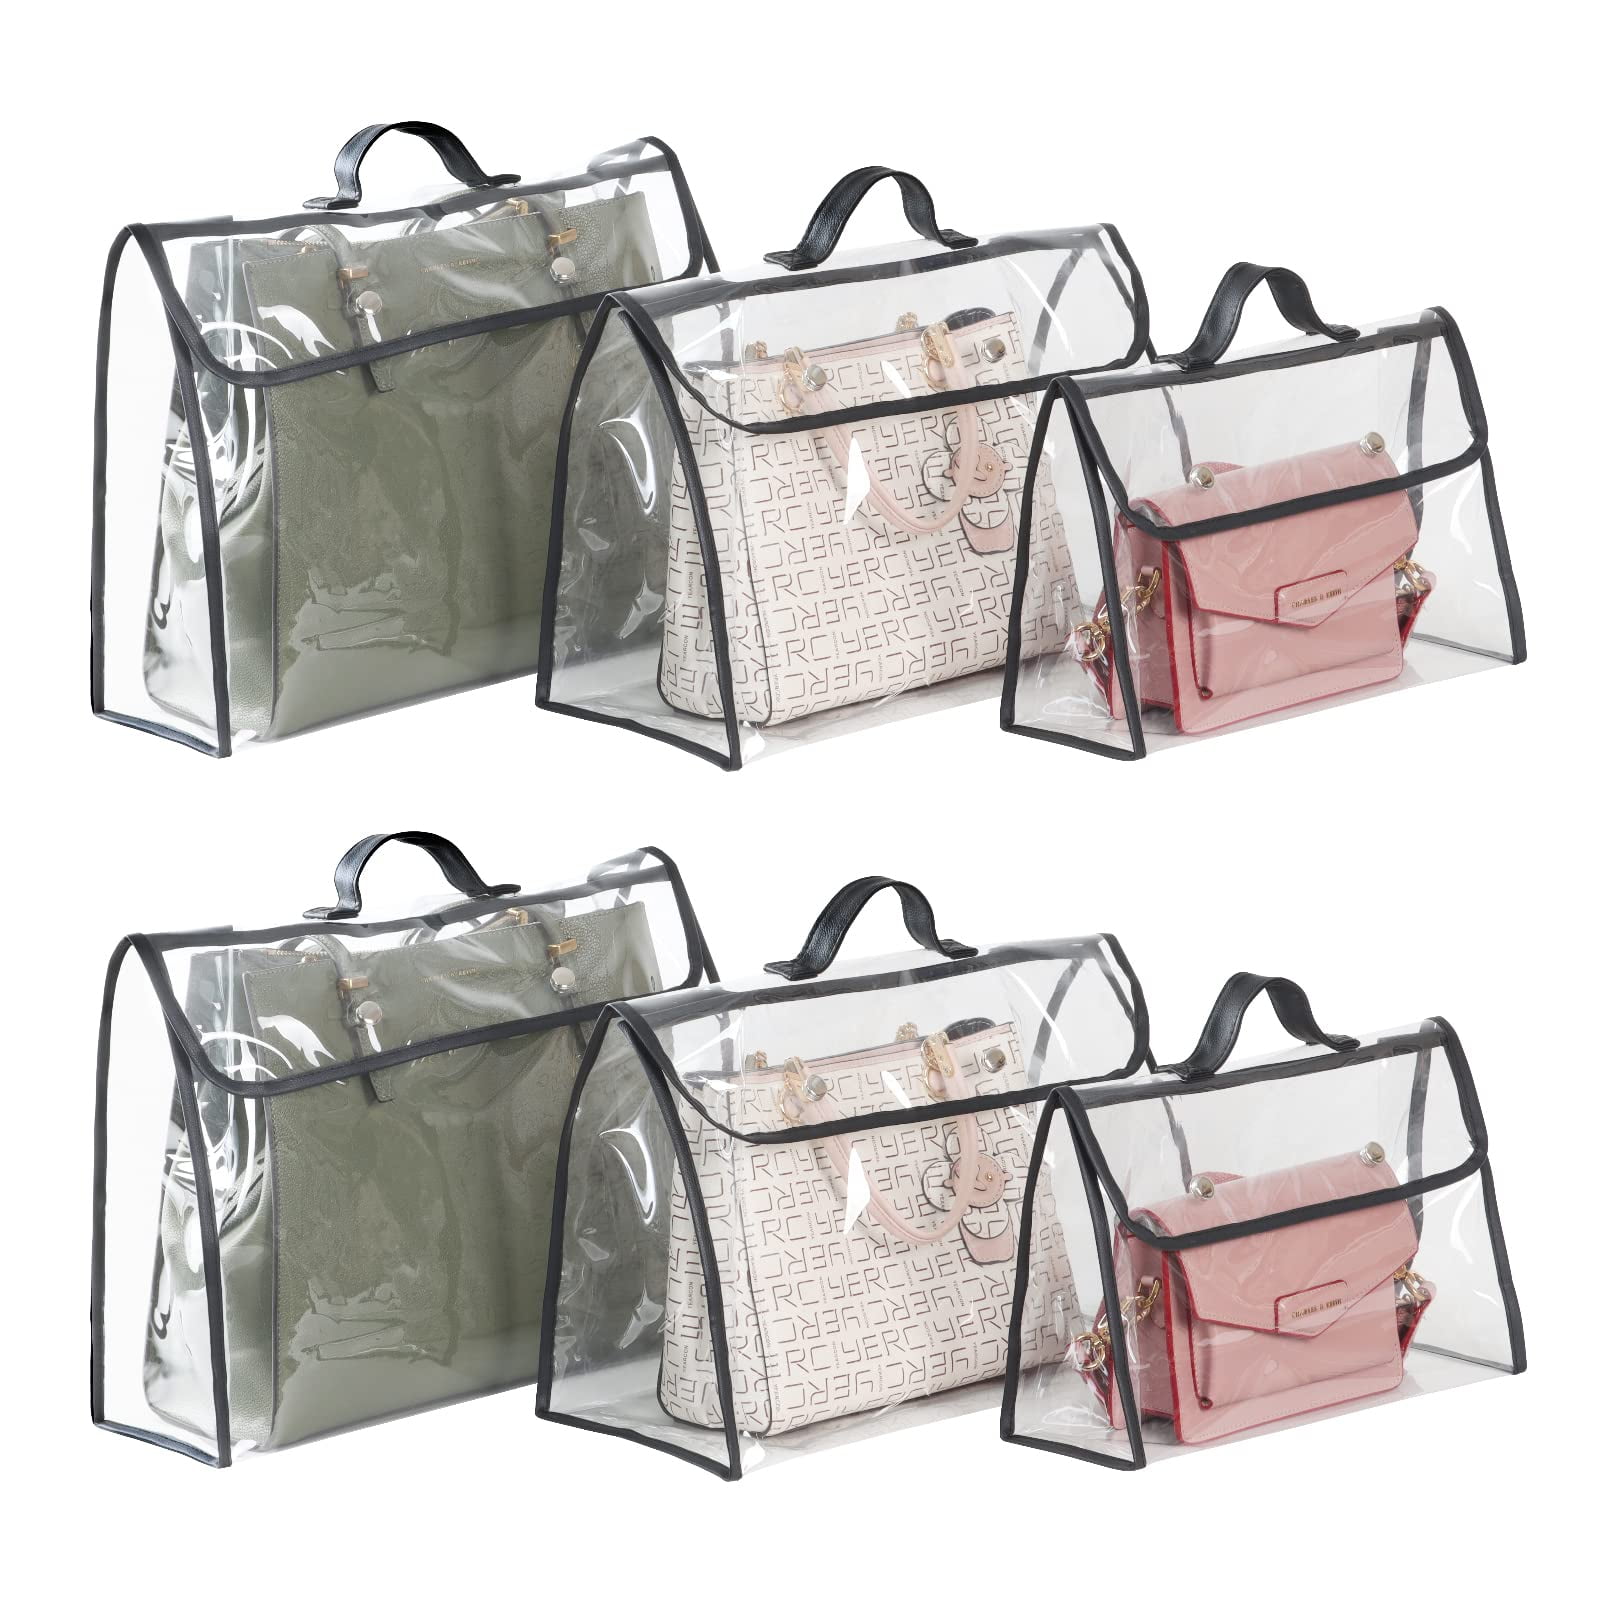 Univivi 6 Pack Dust Bags For Handbags Clear Handbag Purse Storage Organizer  ,Transparent Dust Cover Bags Organizer for Handbags, Tote,Purse Storage